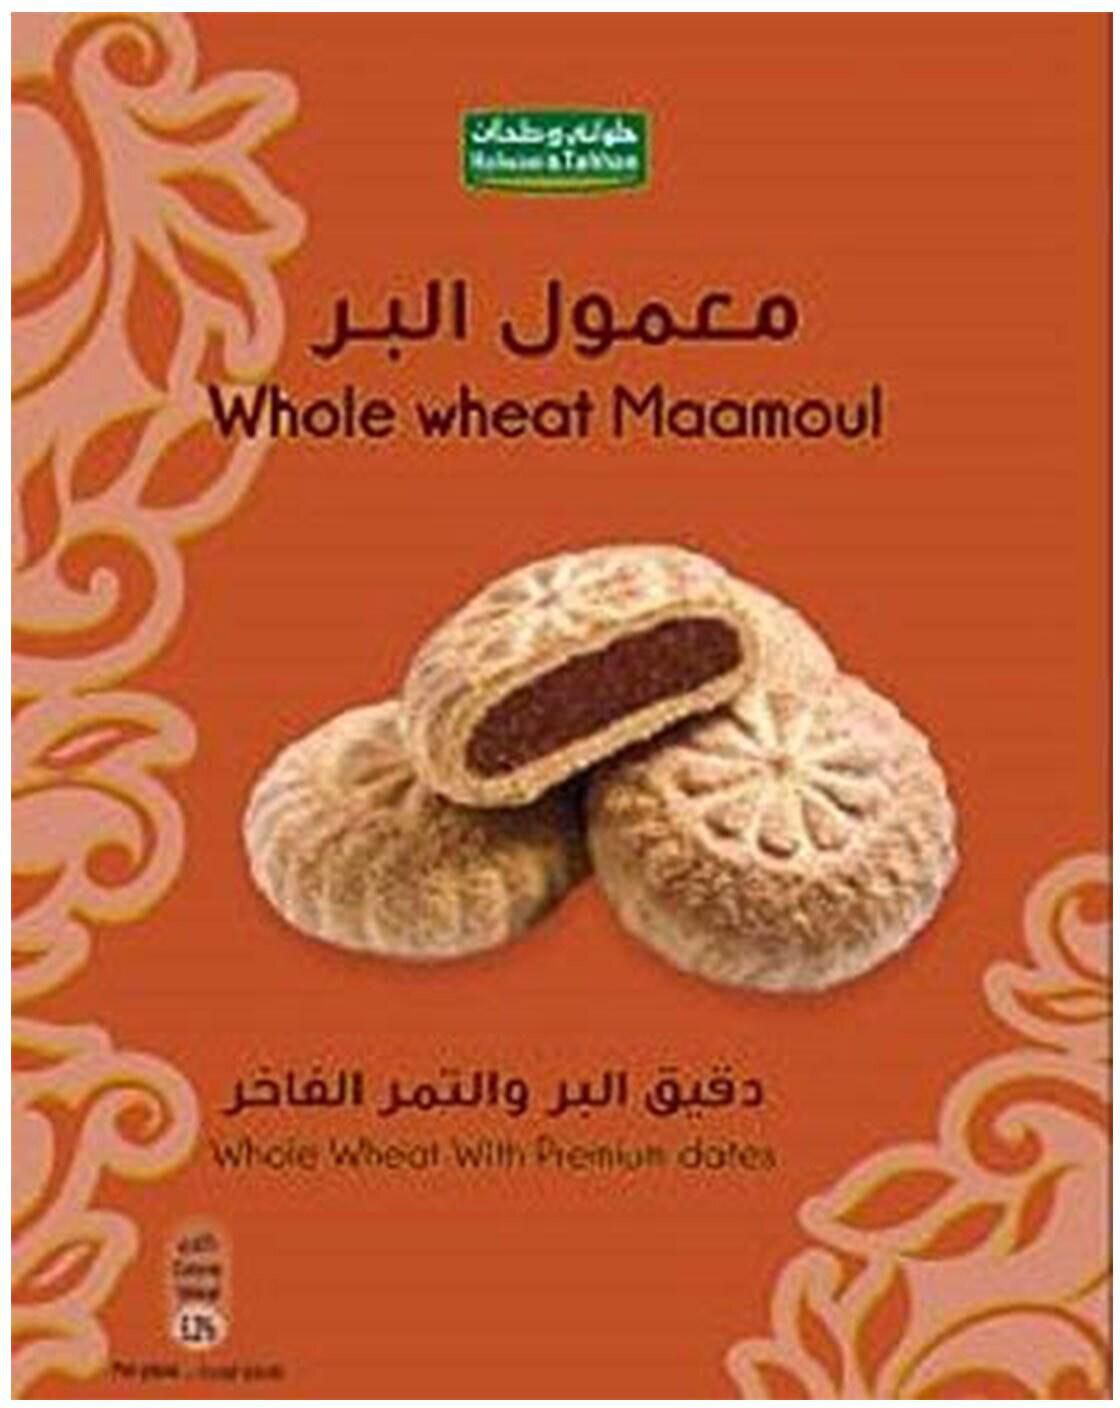 Halwani &amp; tahan whole wheat mamoul 300g